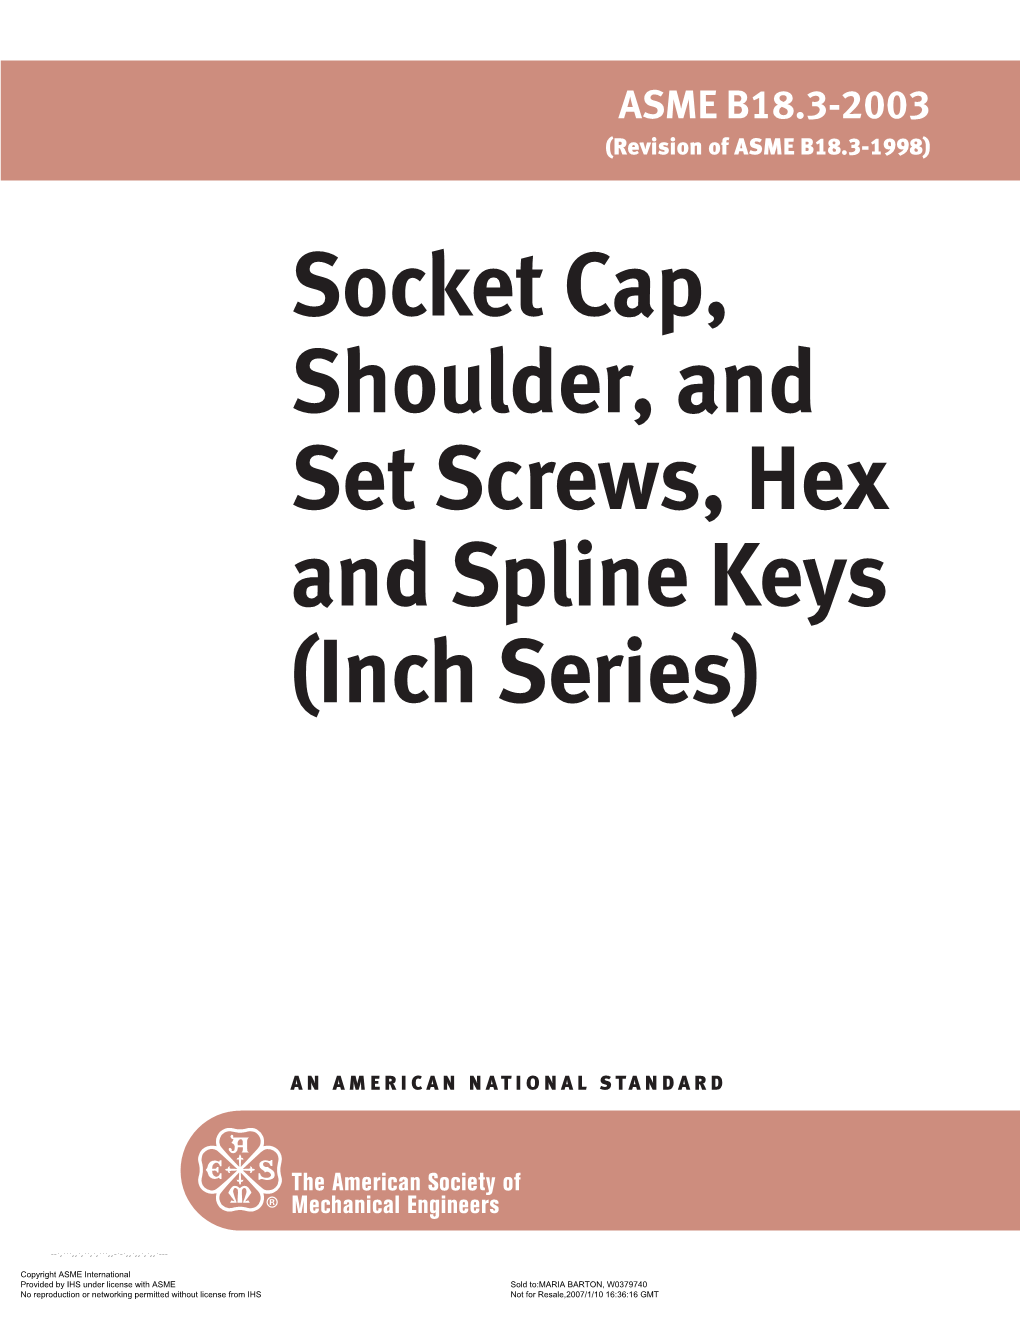 Socket Cap, Shoulder, and Set Screws, Hex and Spline Keys (Inch Series)